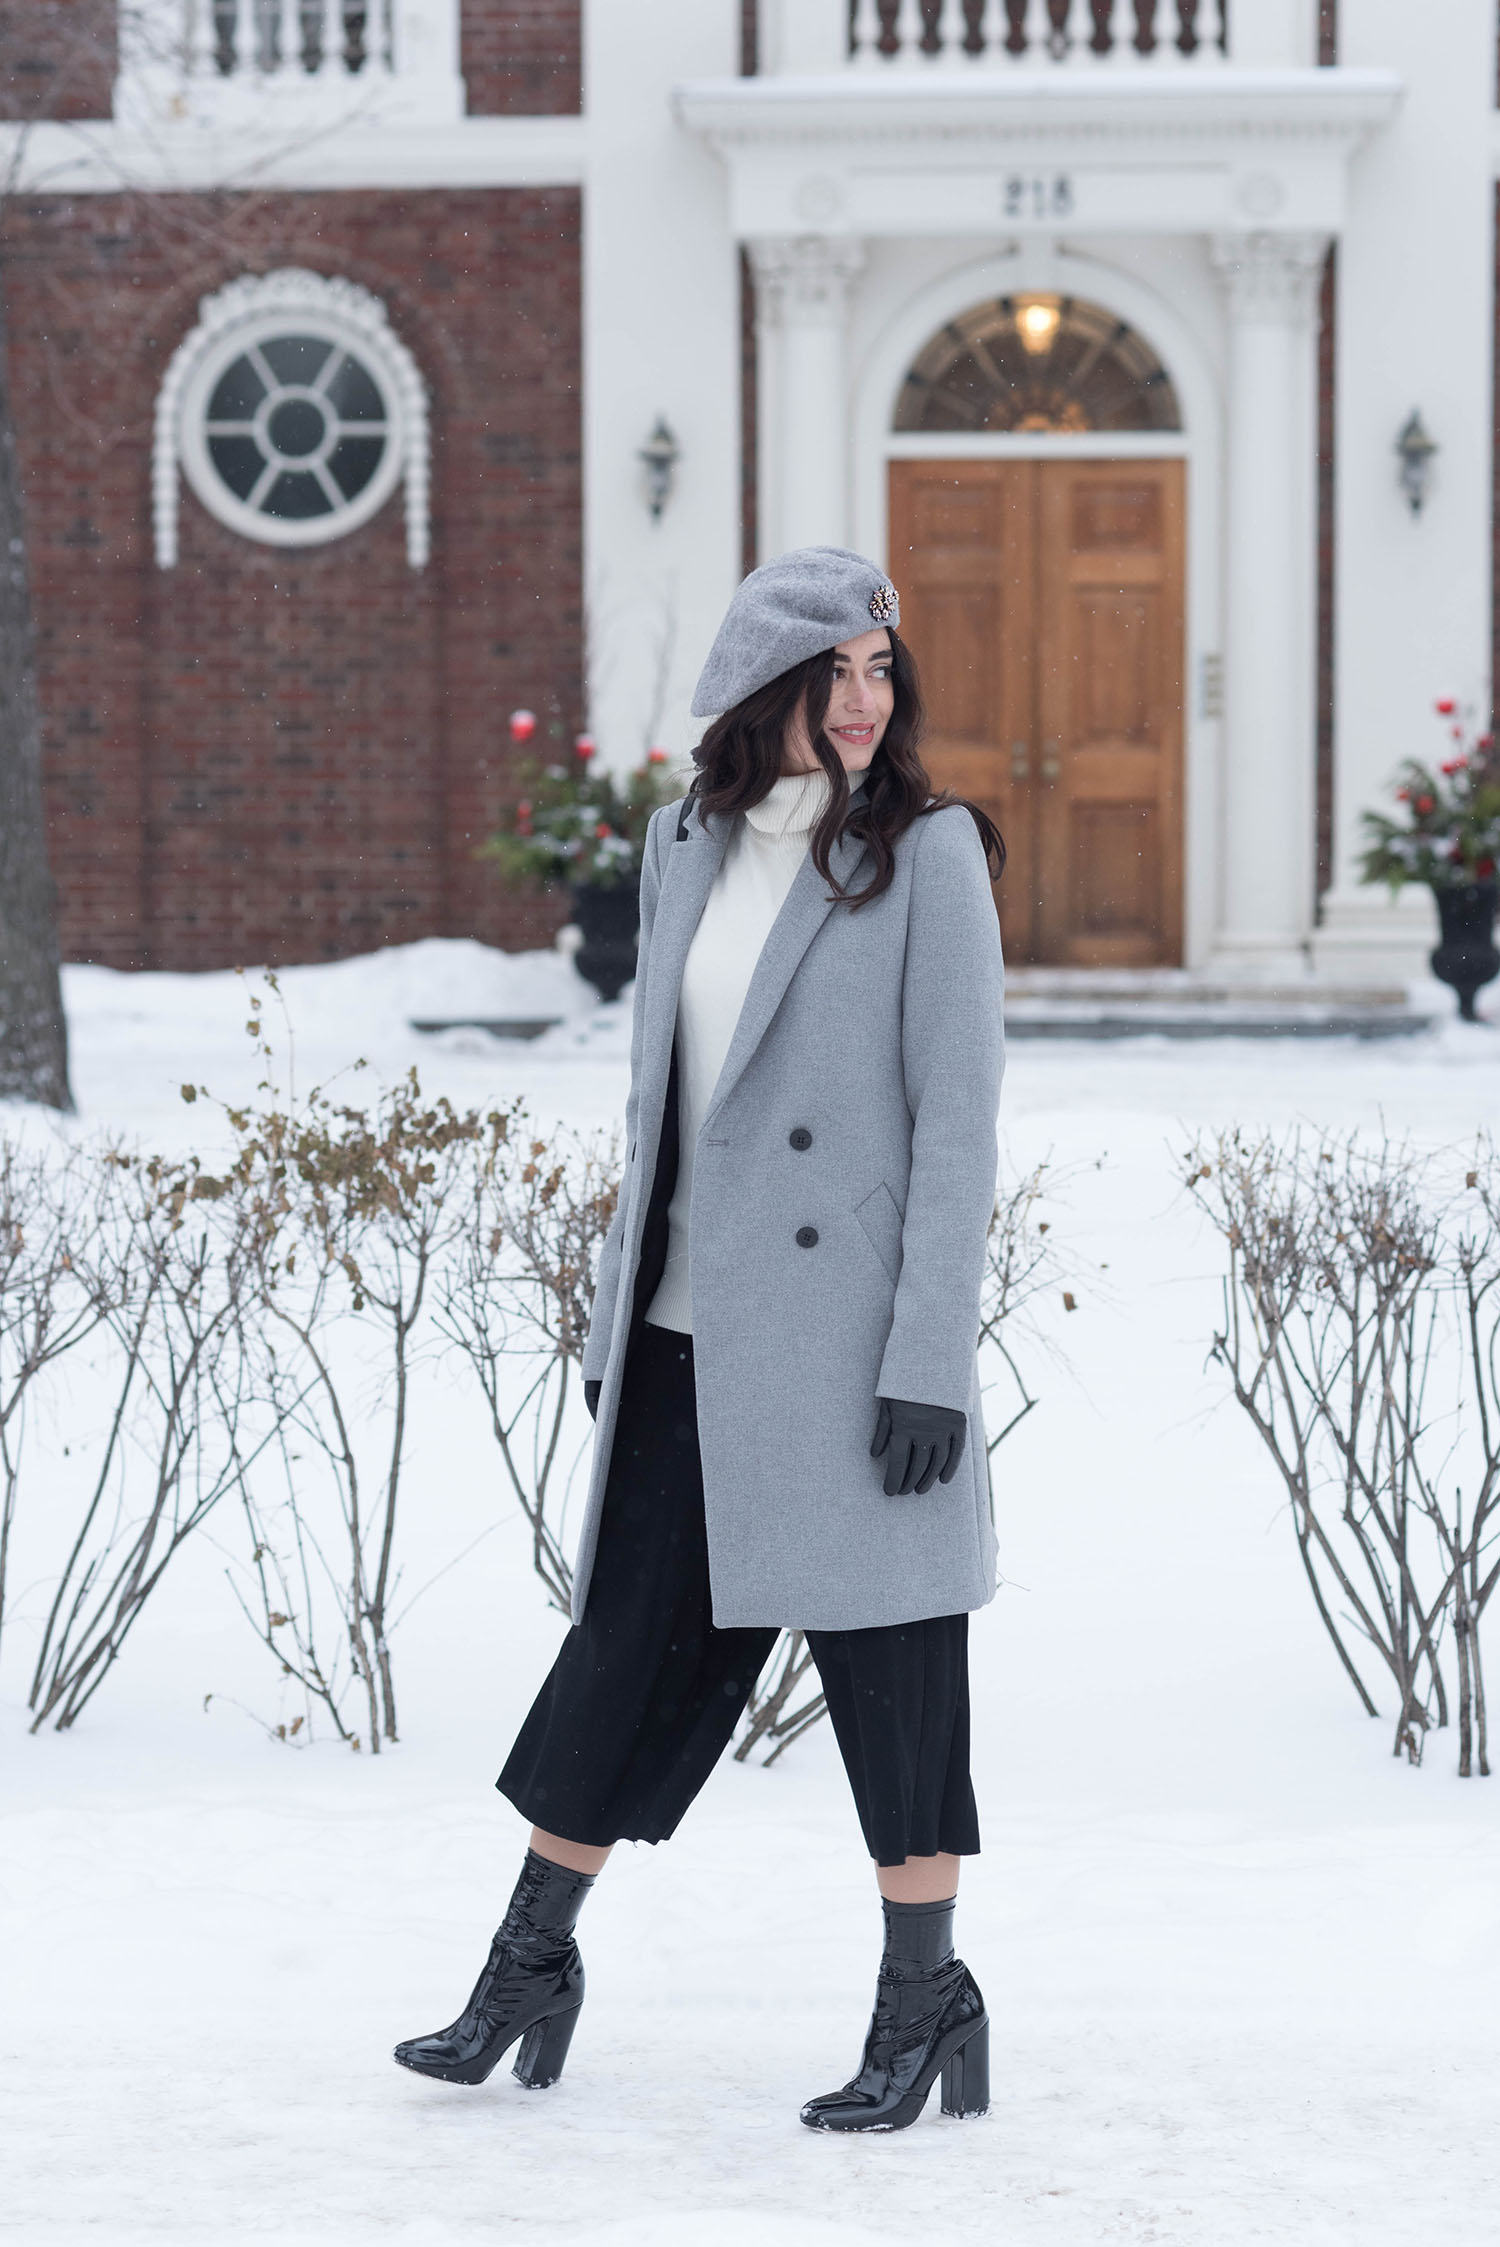 Fashion blogger Cee Fardoe of Coco & Vera walks through the winter snow wearing a Zara coat and Aritzia black culottes